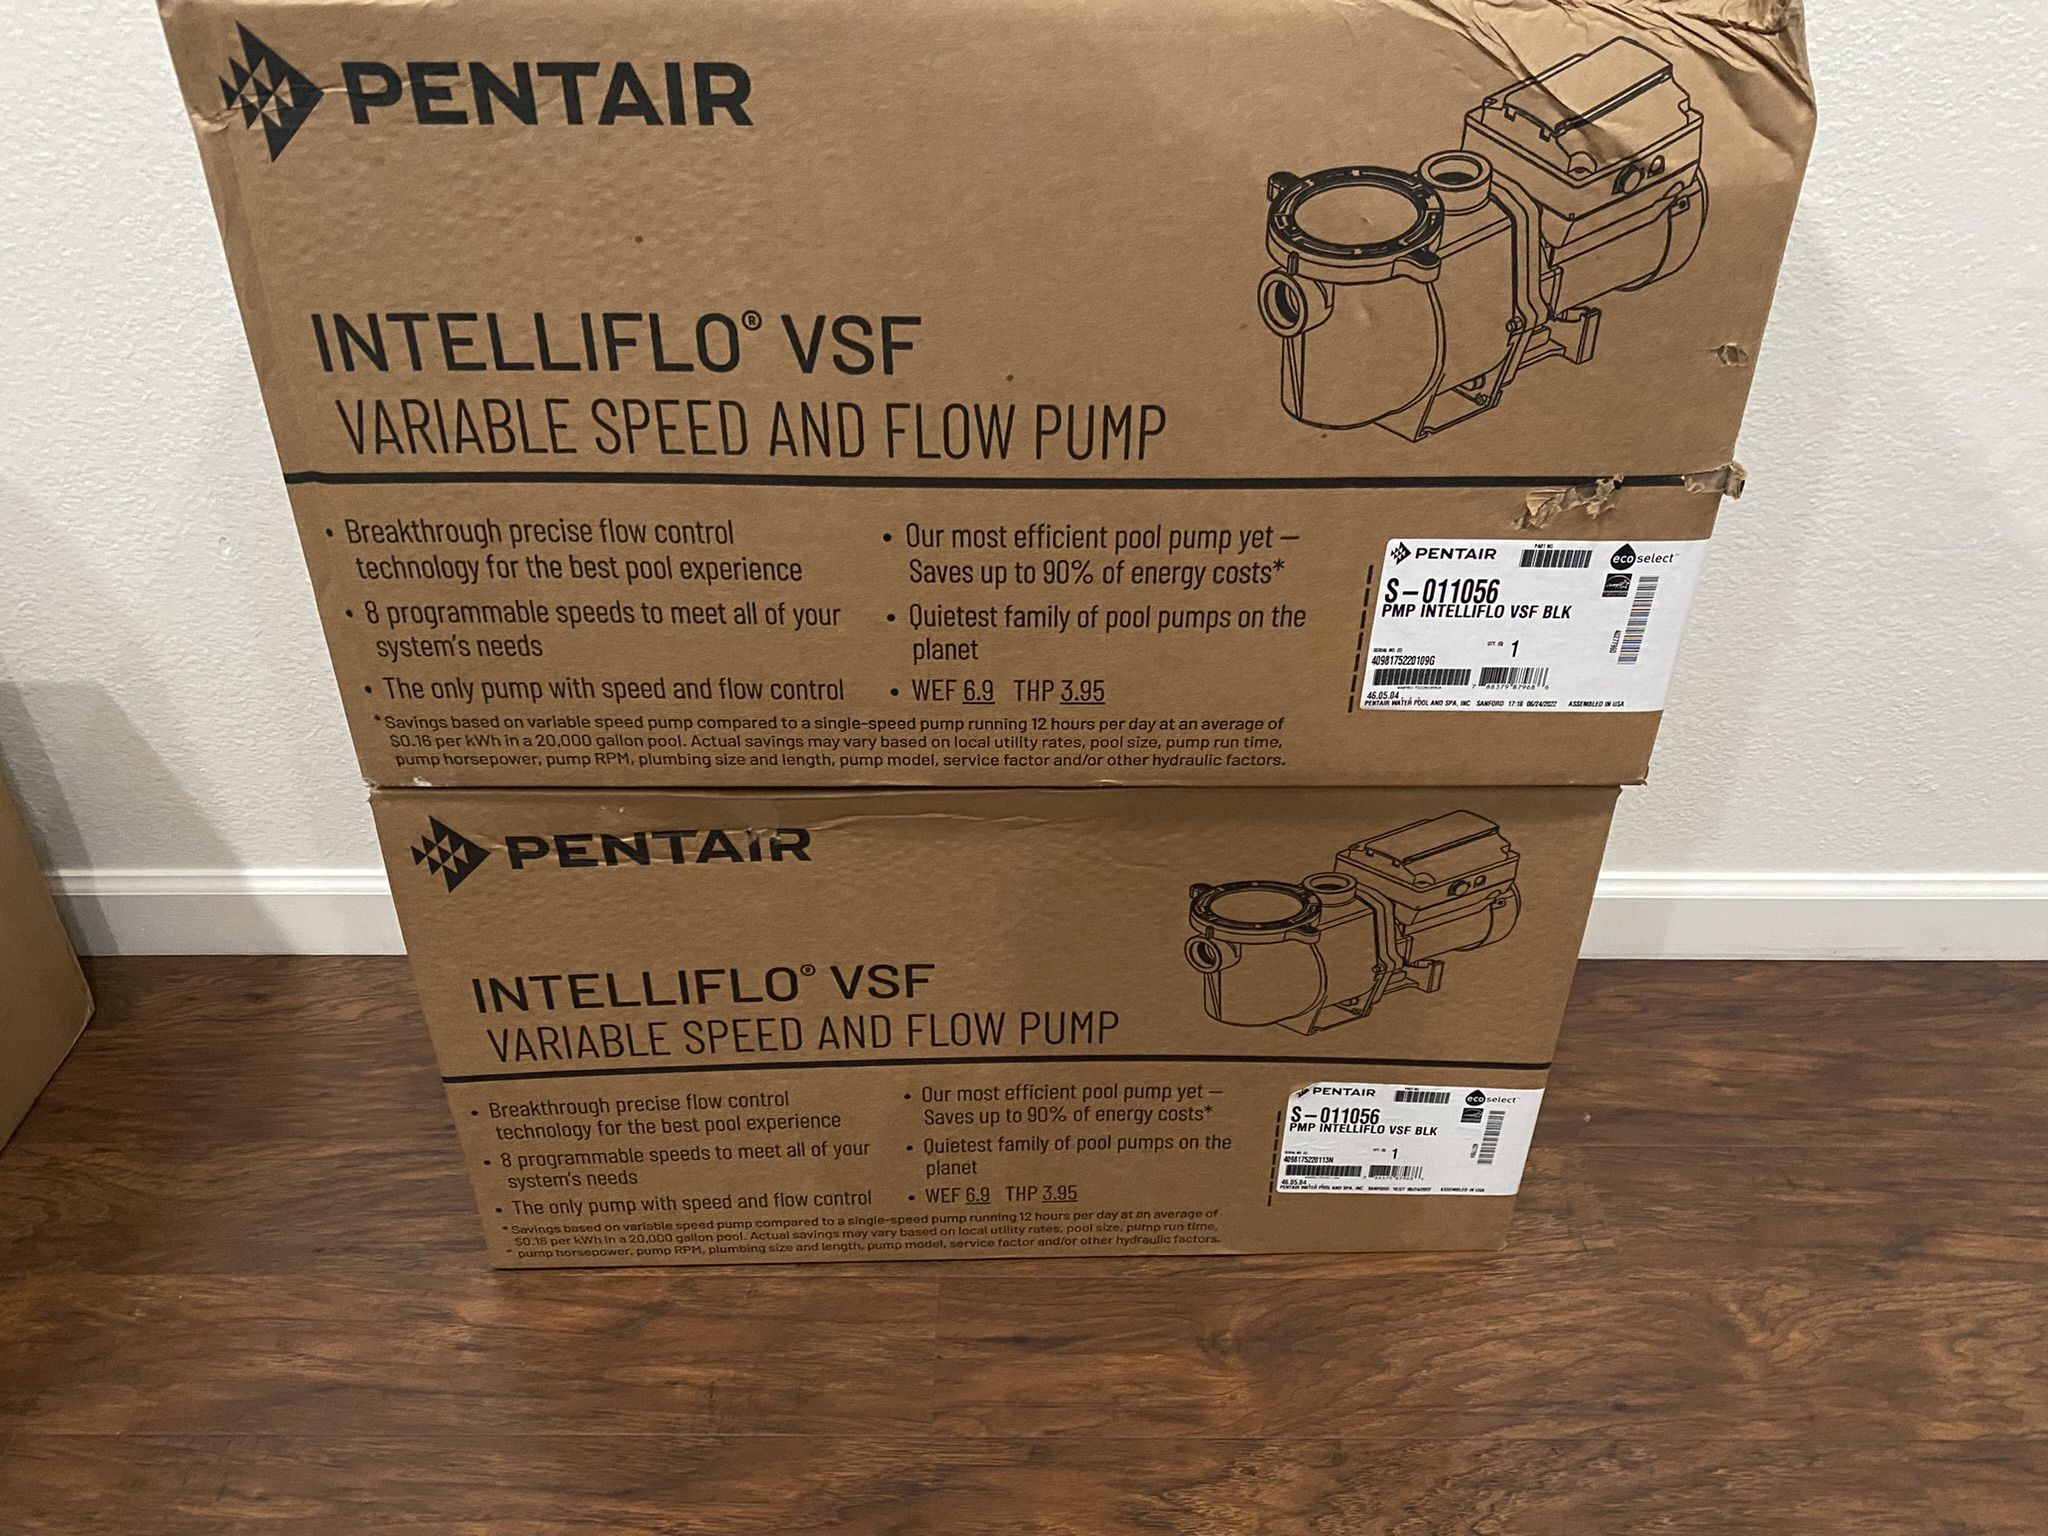 Pentair Intelliflo 3hp VS Pool Pump S-011056(black)